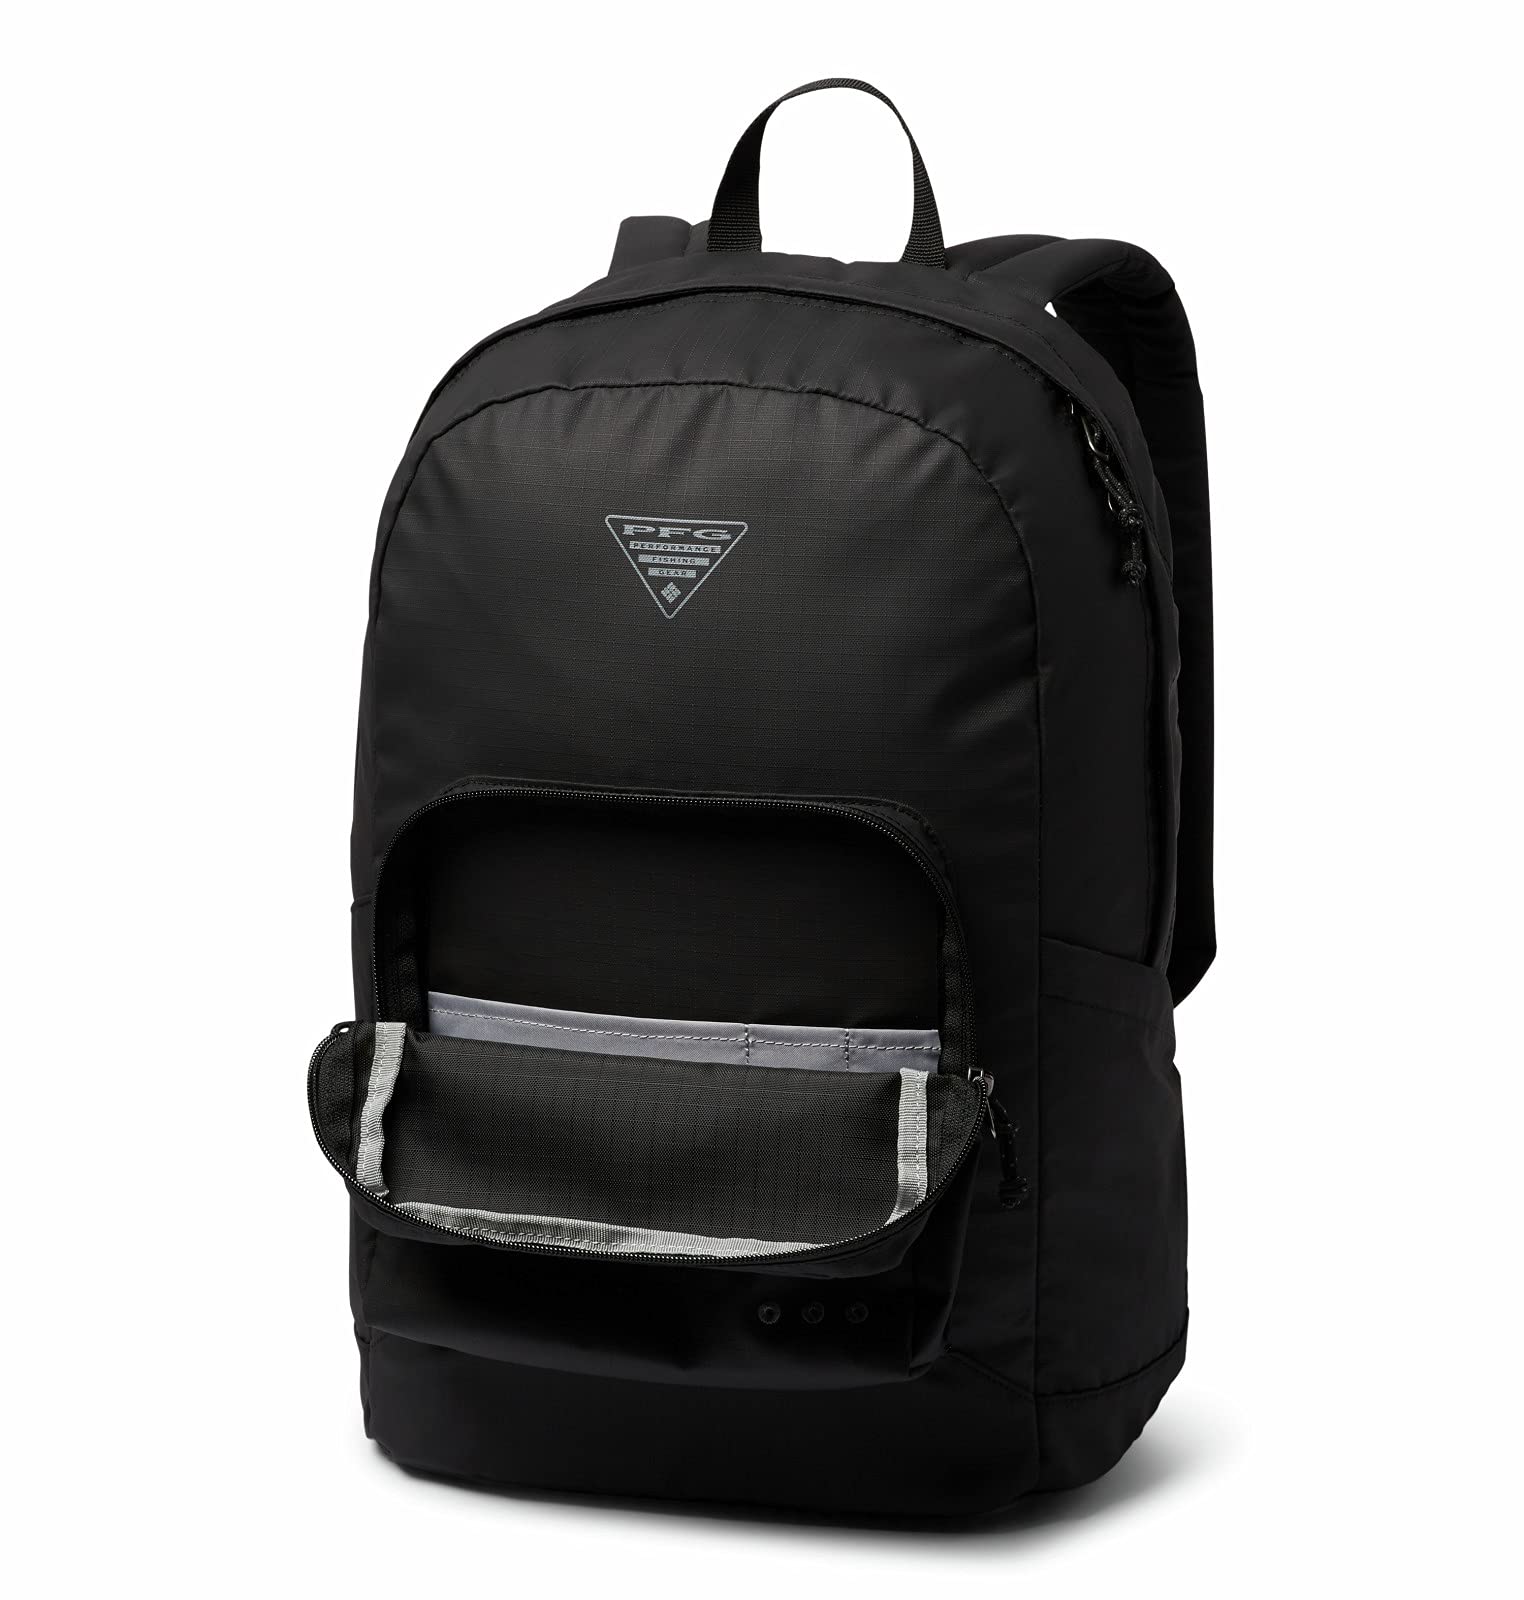 Columbia Unisex Pfg Zigzag 22l Backpack, Black, One Size